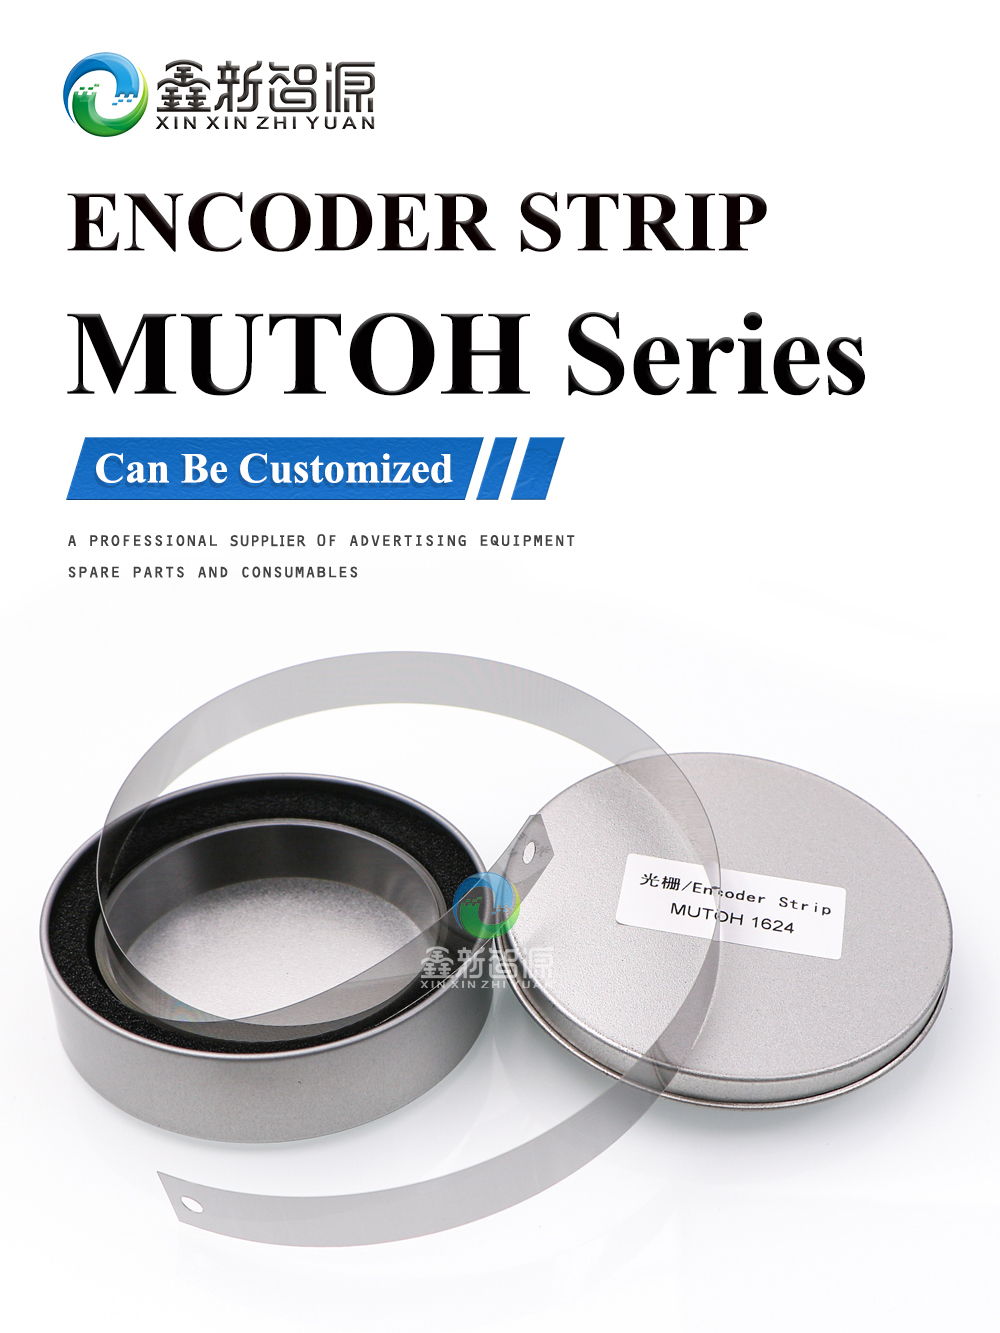 MUTOH Series Encoder Strip